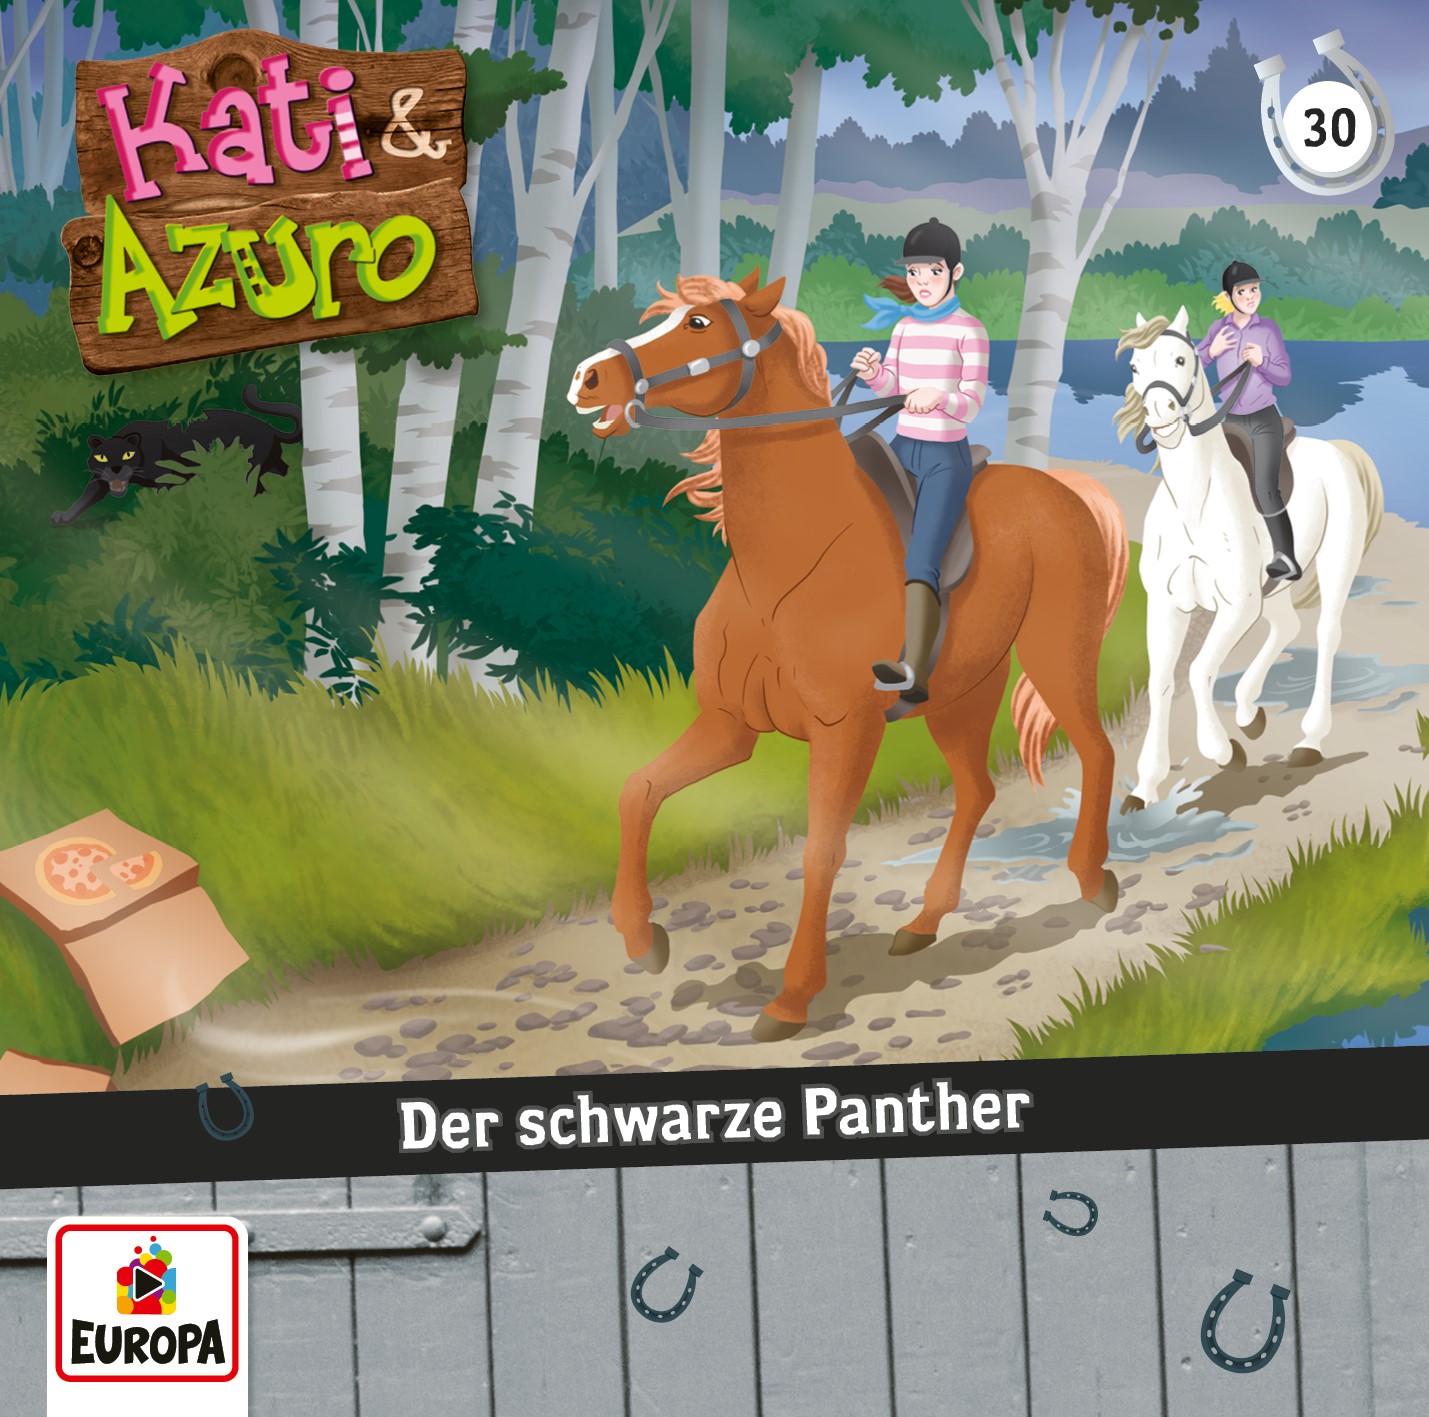 Kati & Azuro: Der schwarze Panther